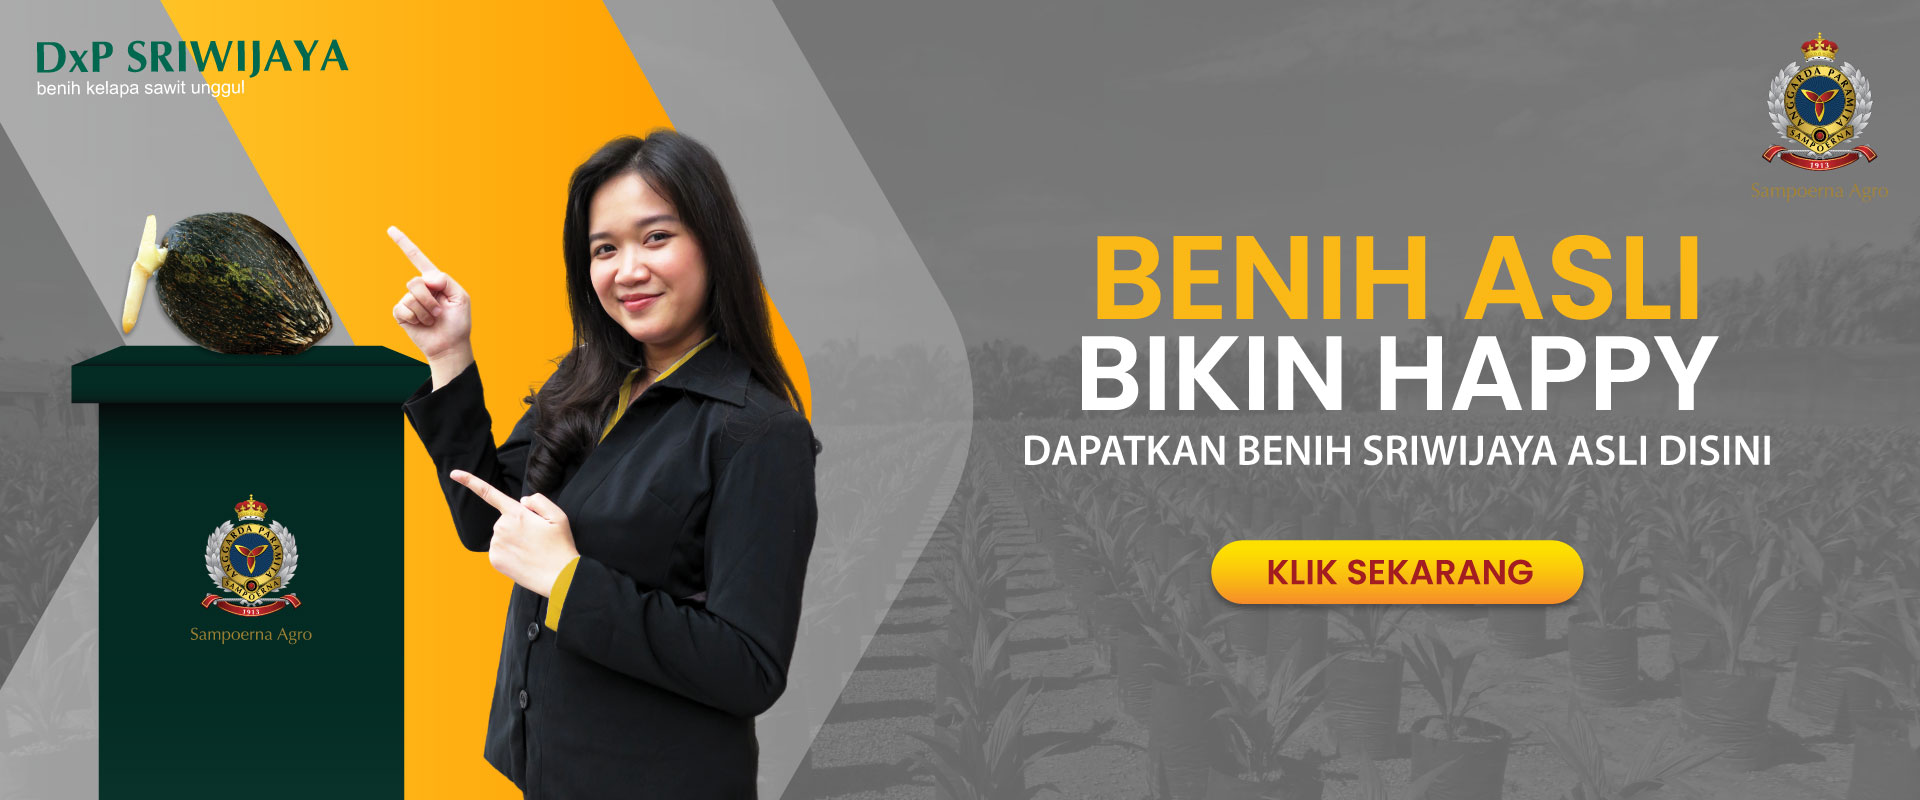 Banner Home Page Produk Benih Sriwijaya